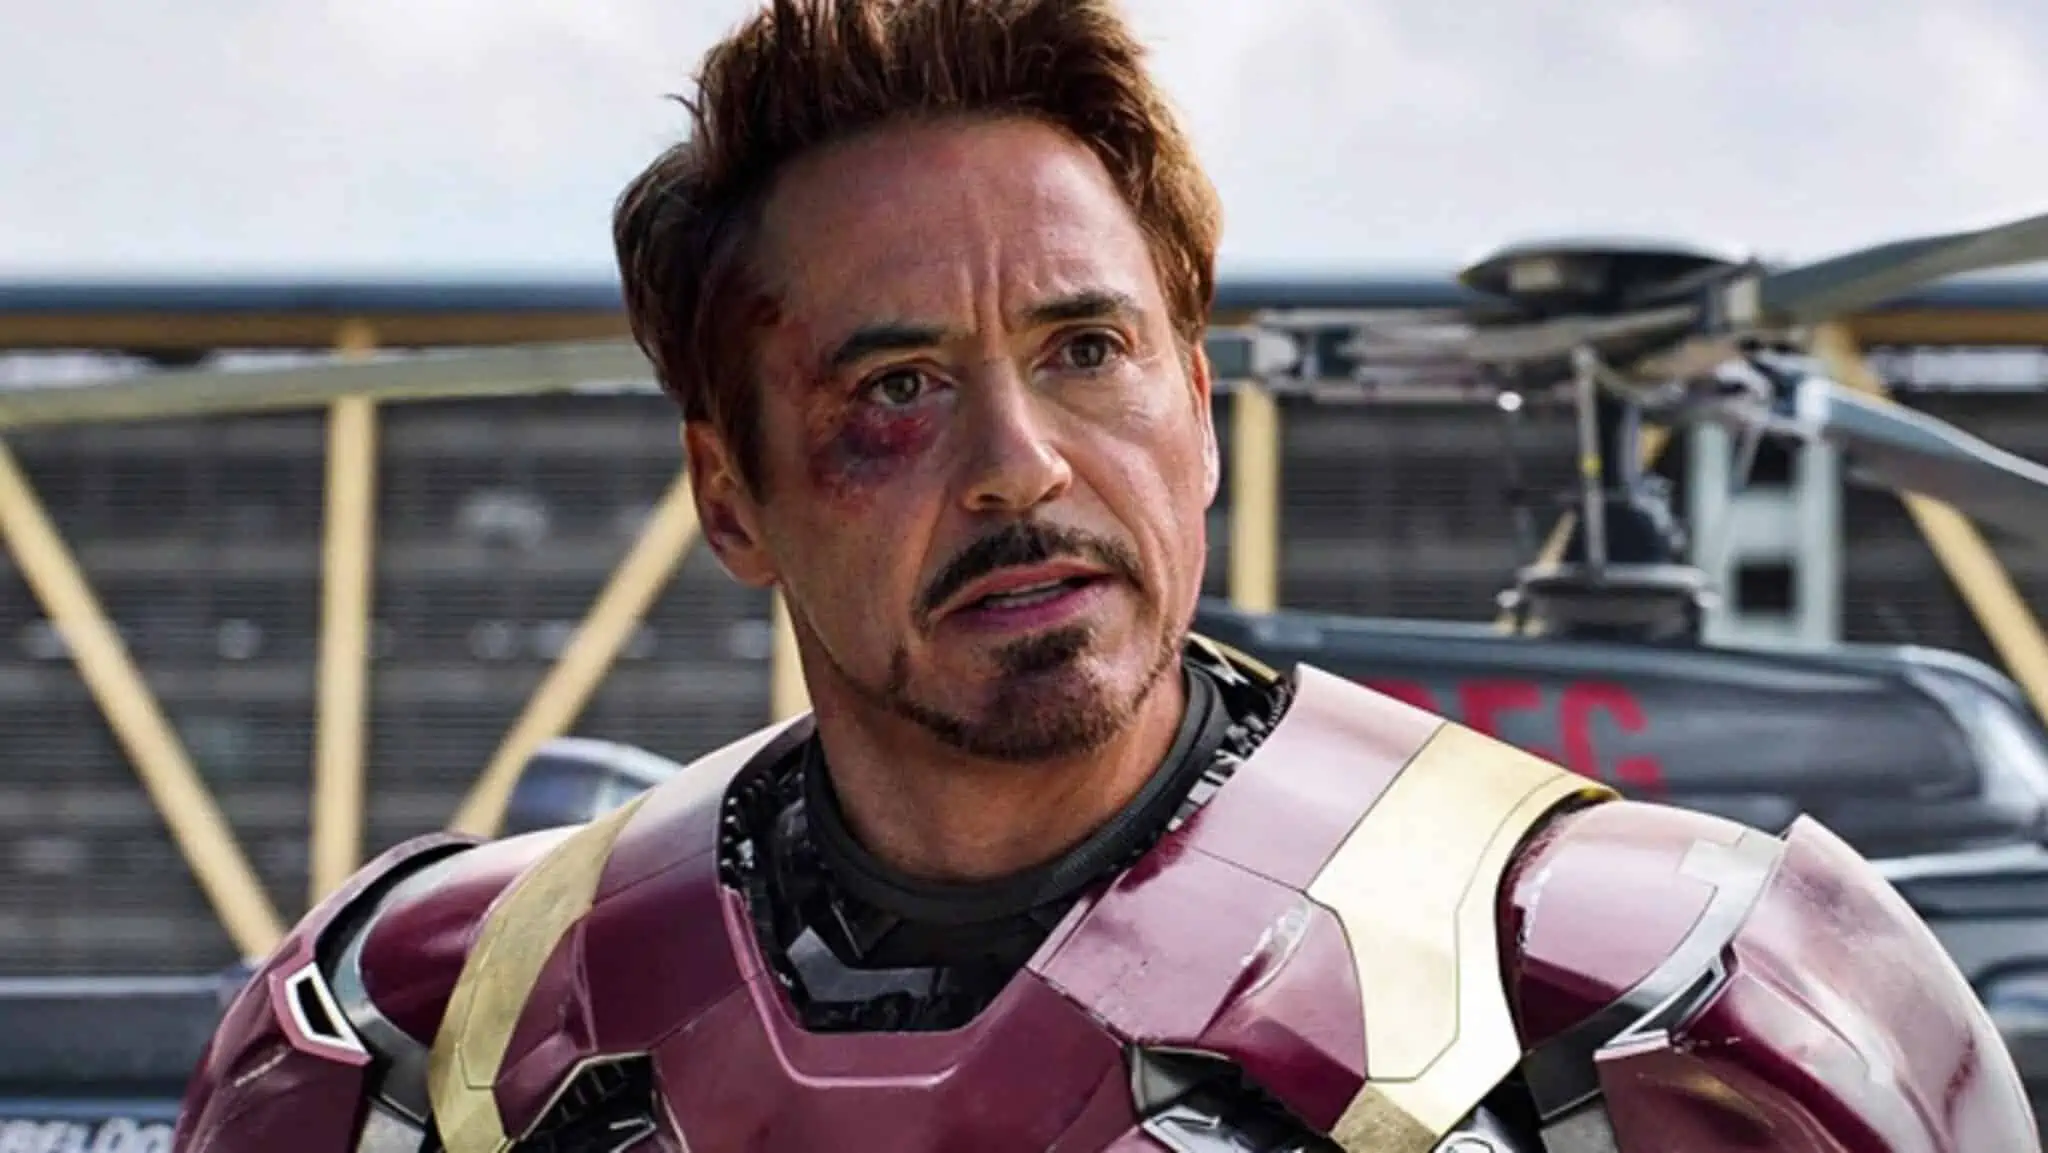 Robert Downey Jr. compie 58 anni: biografia e carriera di "Iron Man"